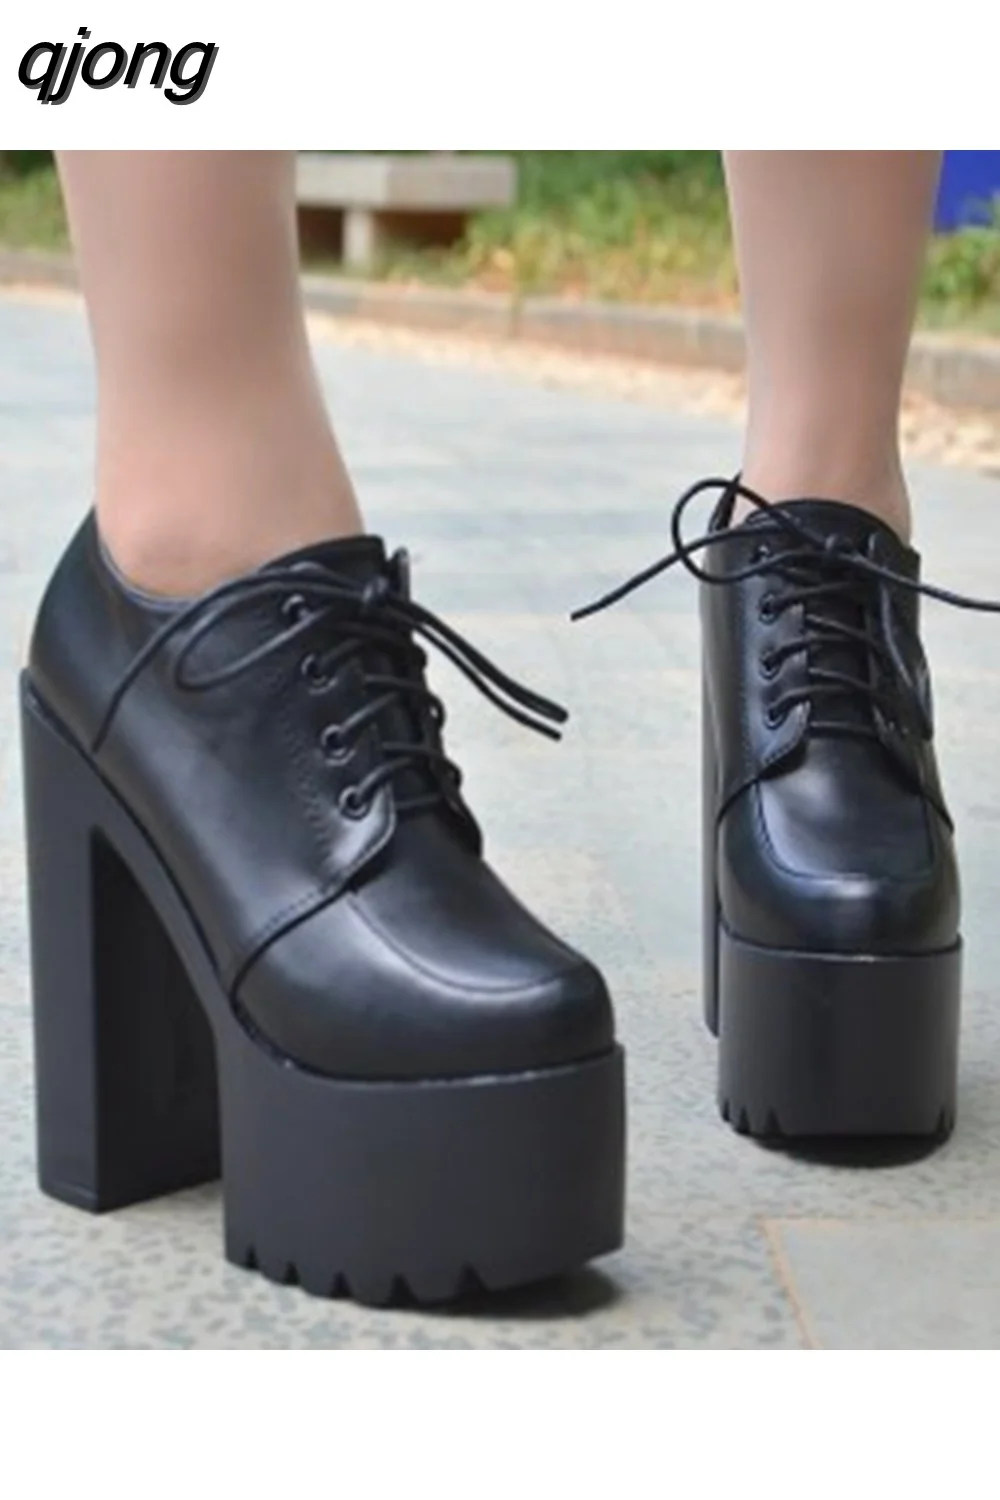 qjong Autumn Women's Crude Heel Single Shoes 14Cm Super High Heel Platform Boots Shallow Simple Elegant Square Heels Shoes